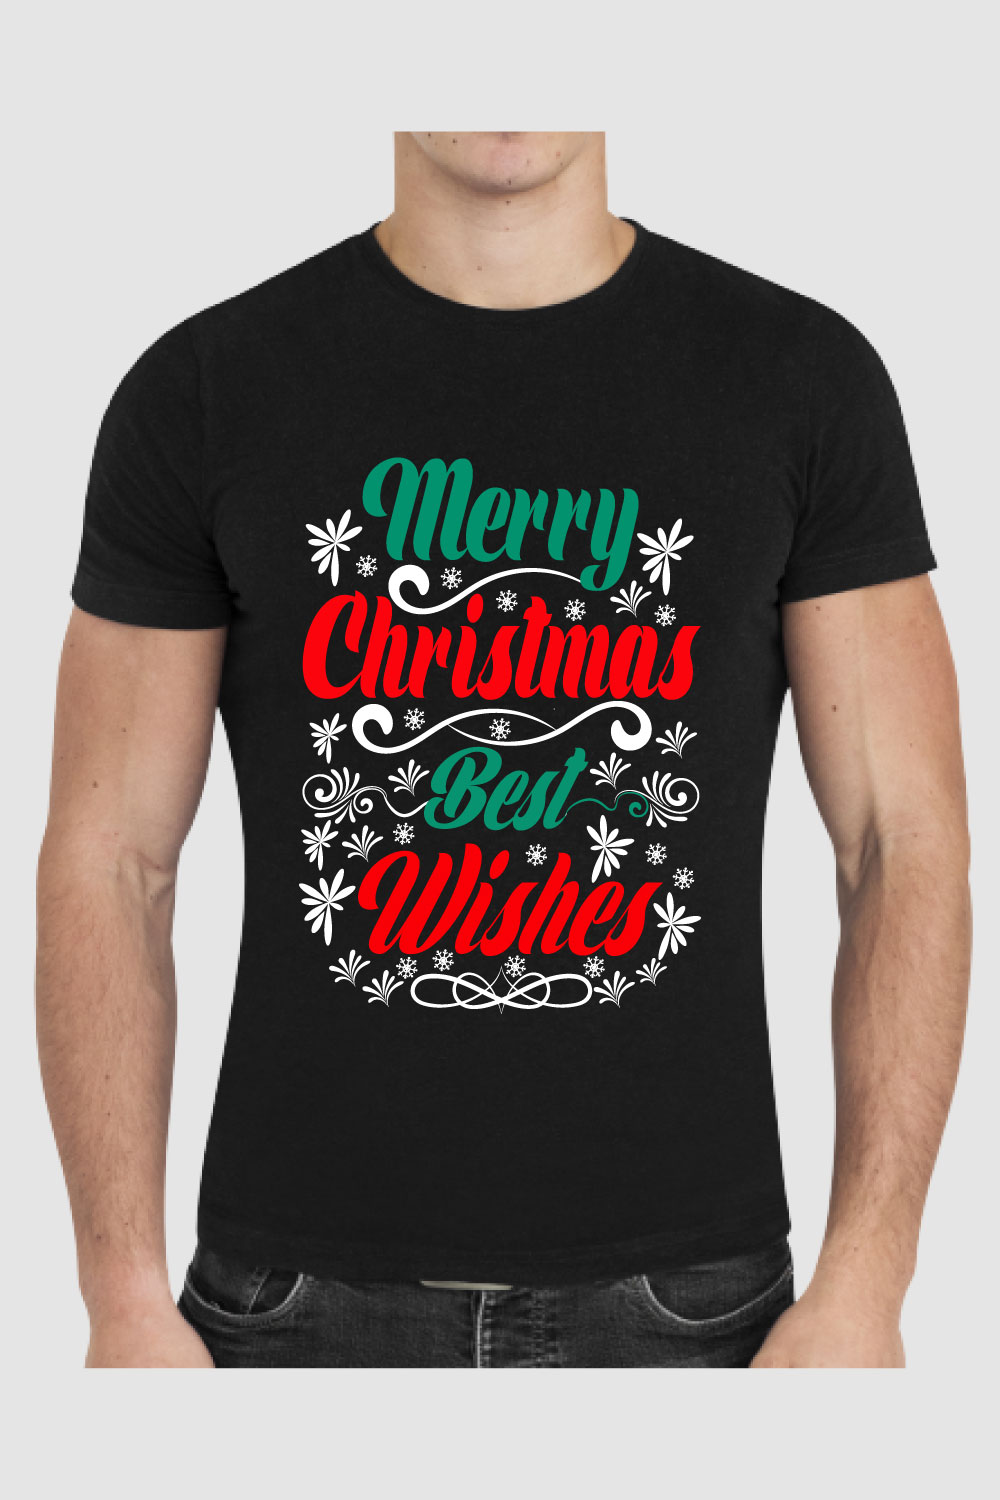 Merry Christmas T-Shirt Design pinterest preview image.